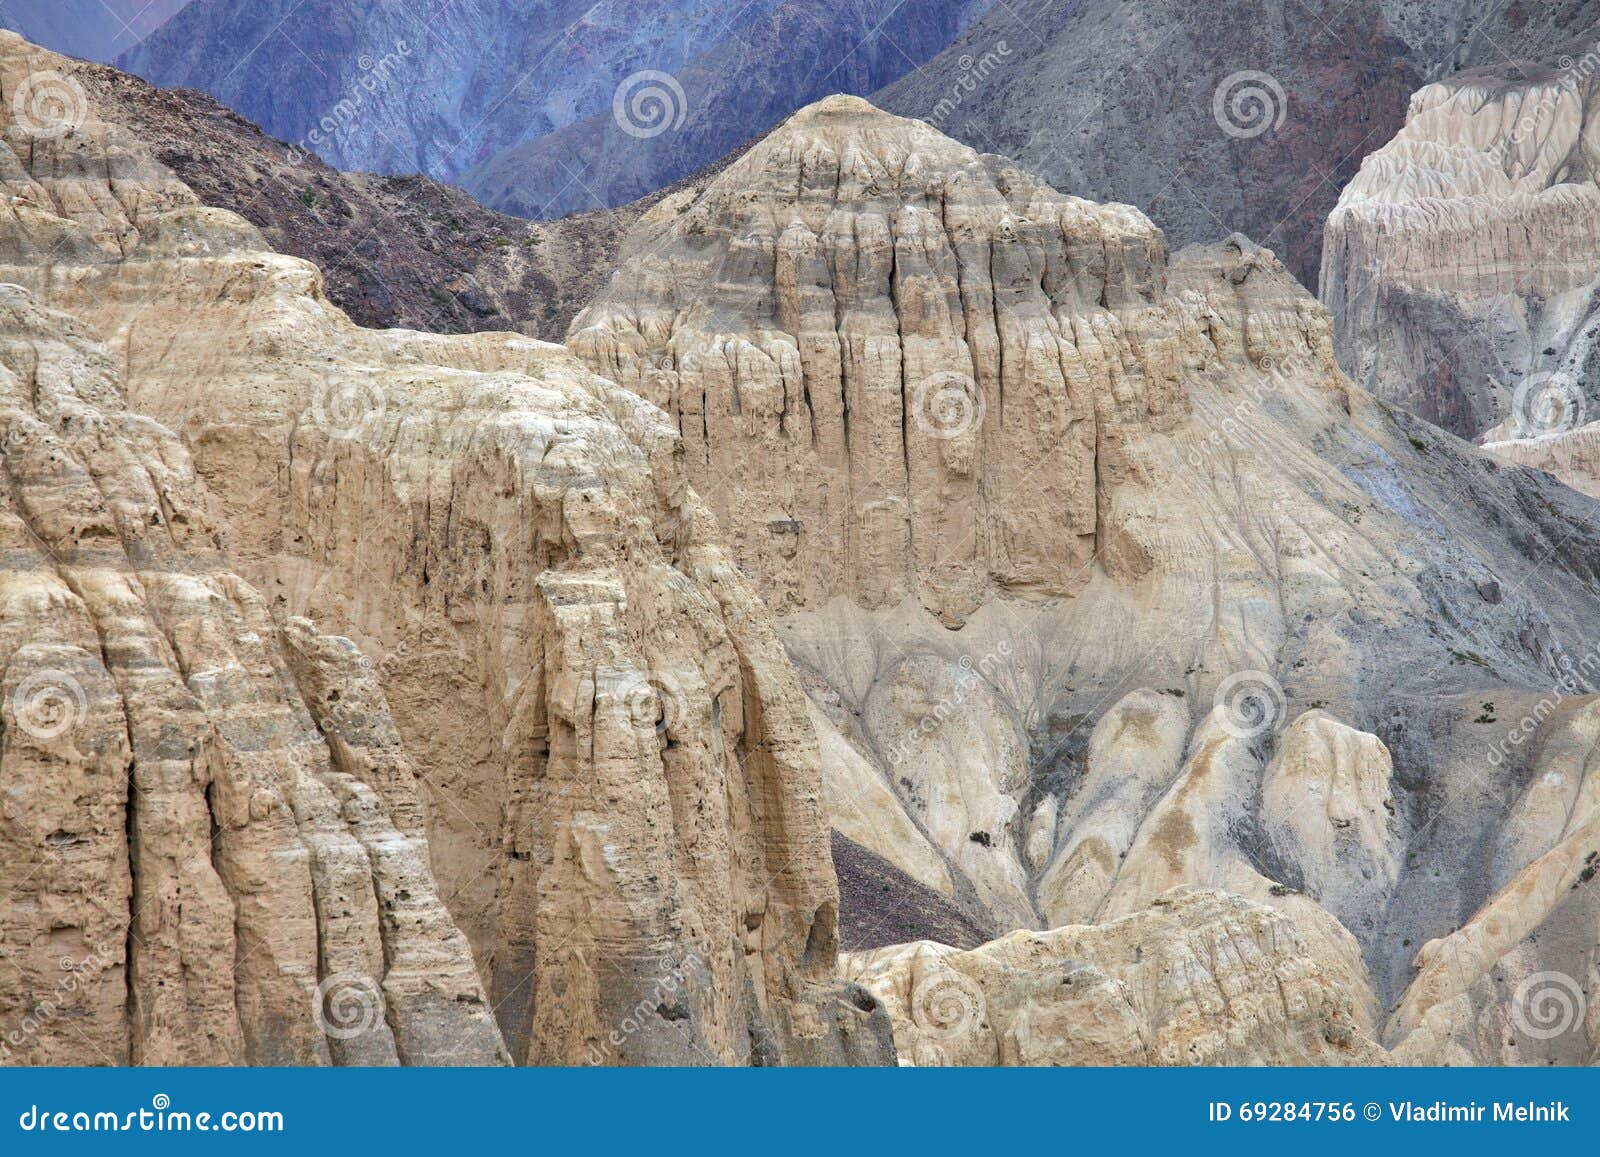 sedimentary rocks in ladakh, jammu & kashmir, india